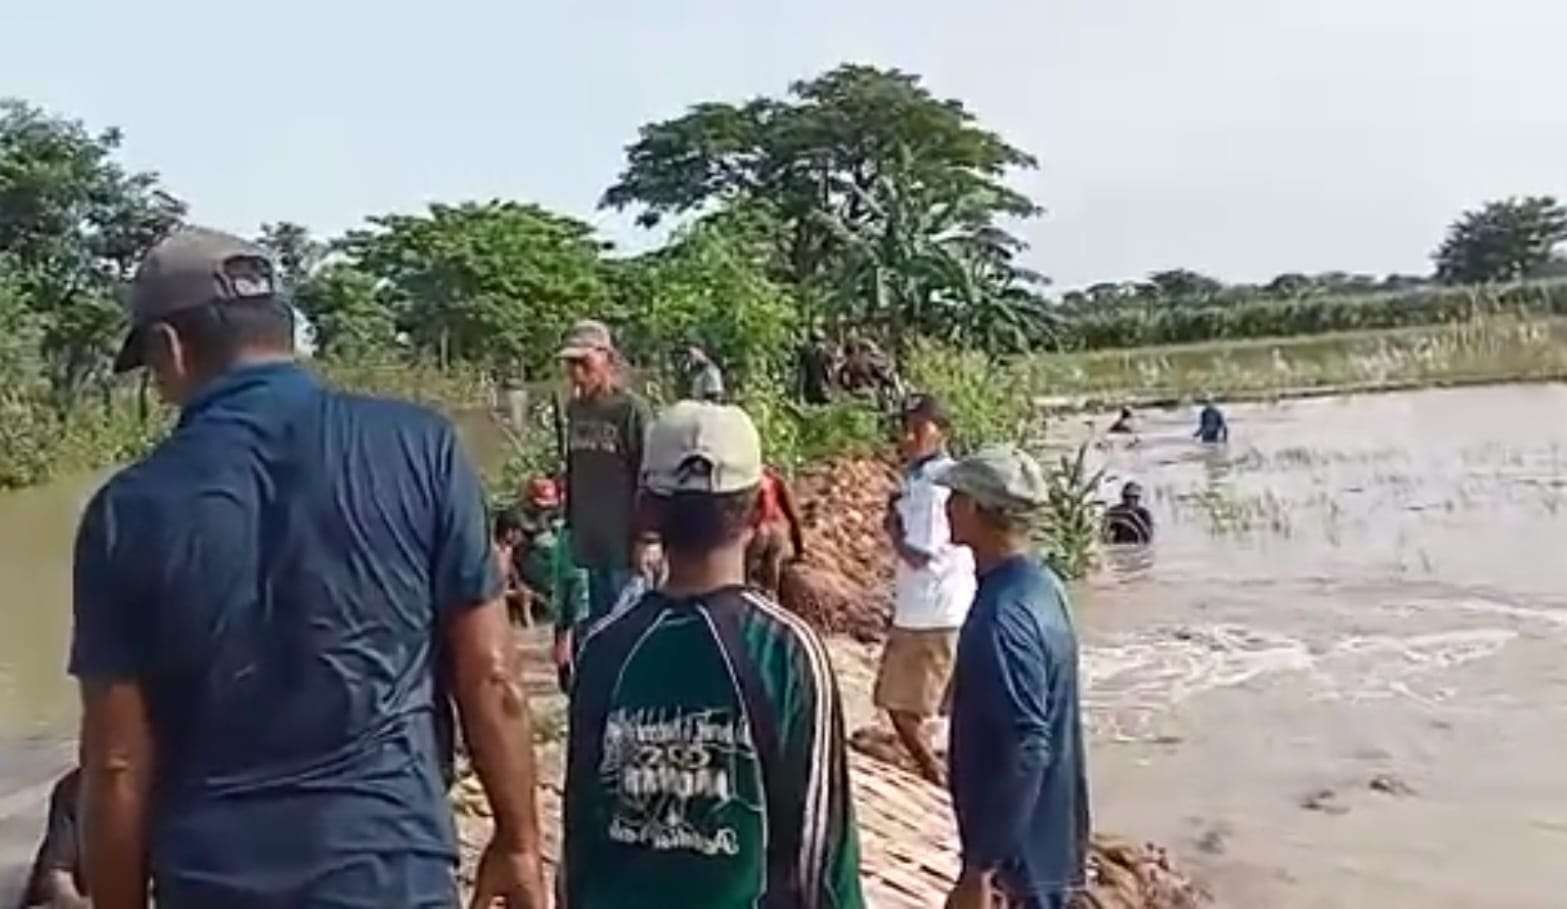 Keterangan Foto : Warga Pomahanjanggan,Kecamatan Turi sedang bergotongroyong memperbaiki tangkis Kali yang jebol (Foto: Istimewa)